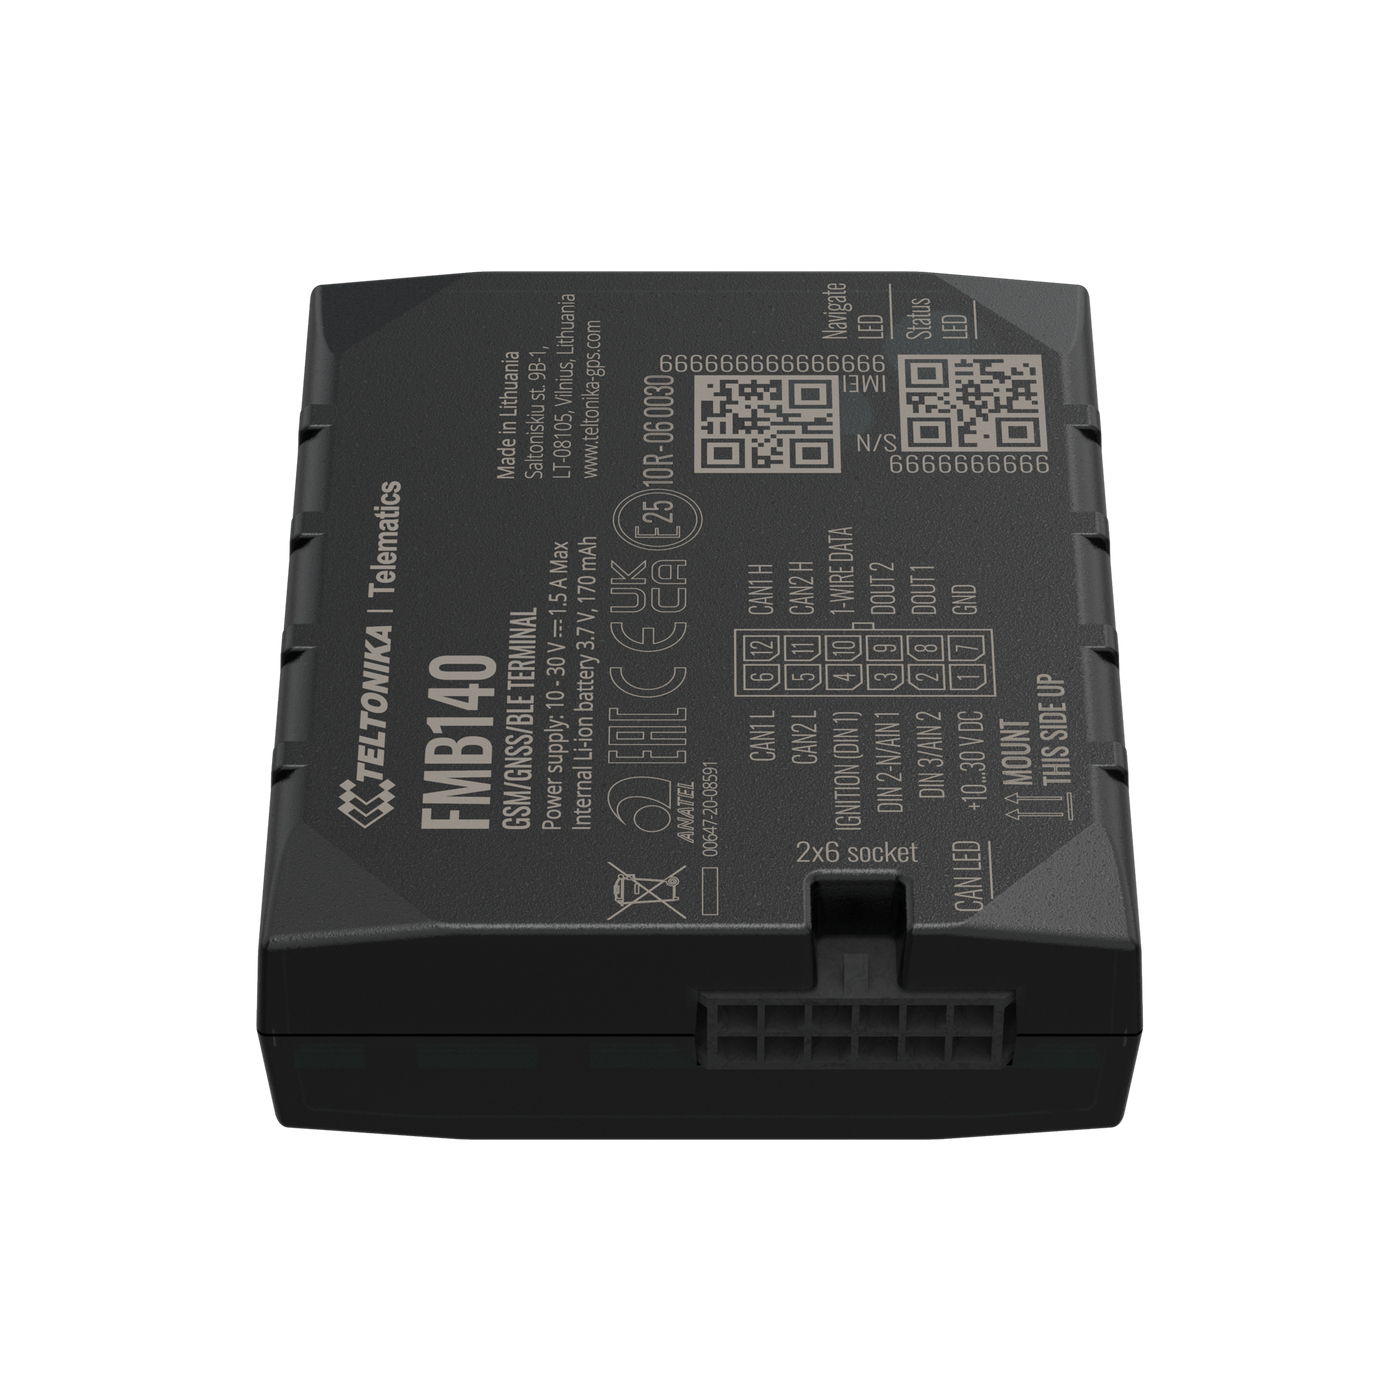 Teltonika FMB140 - GPS with Accelerometer